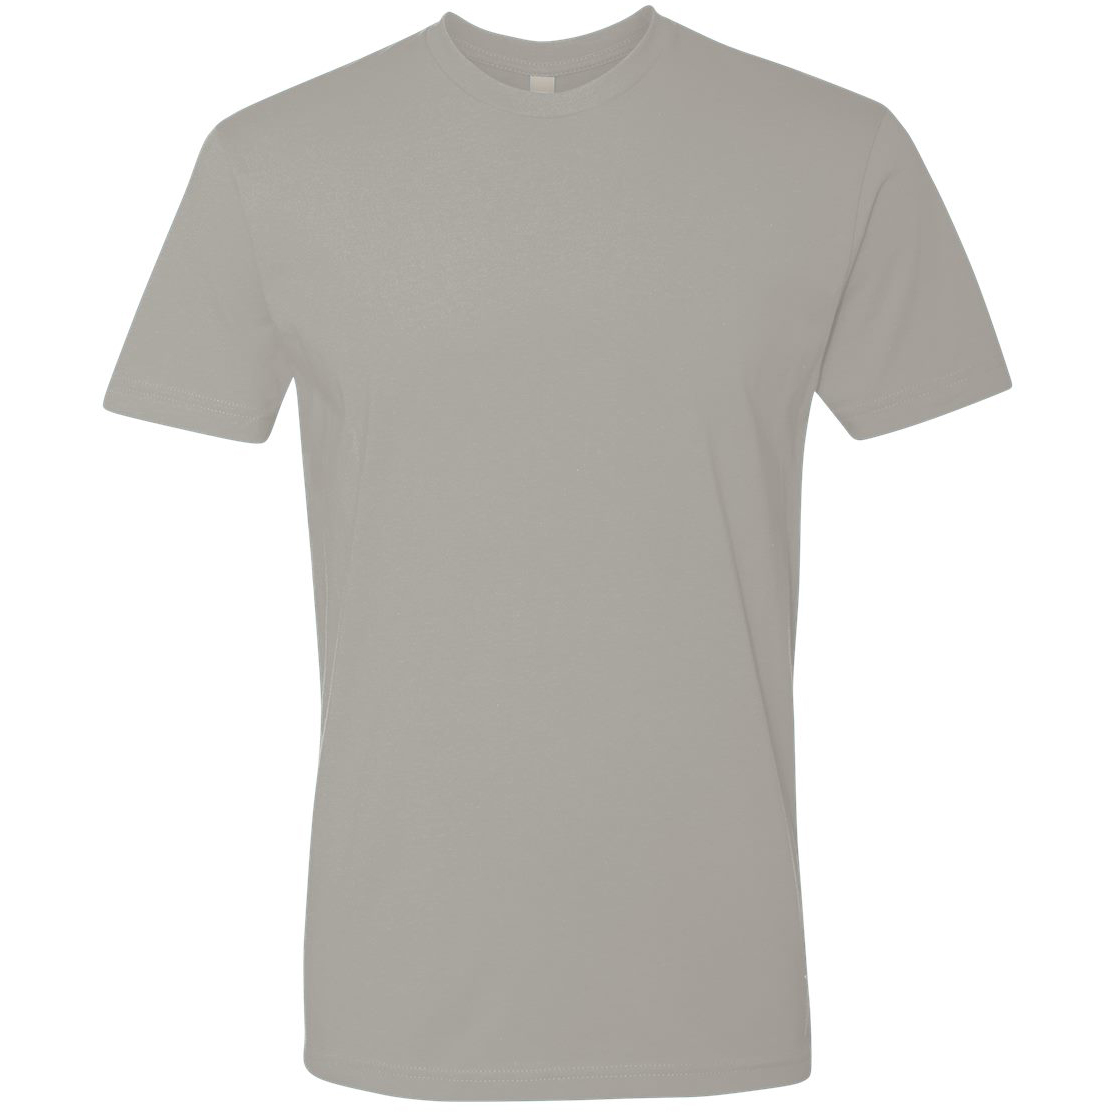 Next Level 3600 Heather Gray Unisex Cotton T Shirt